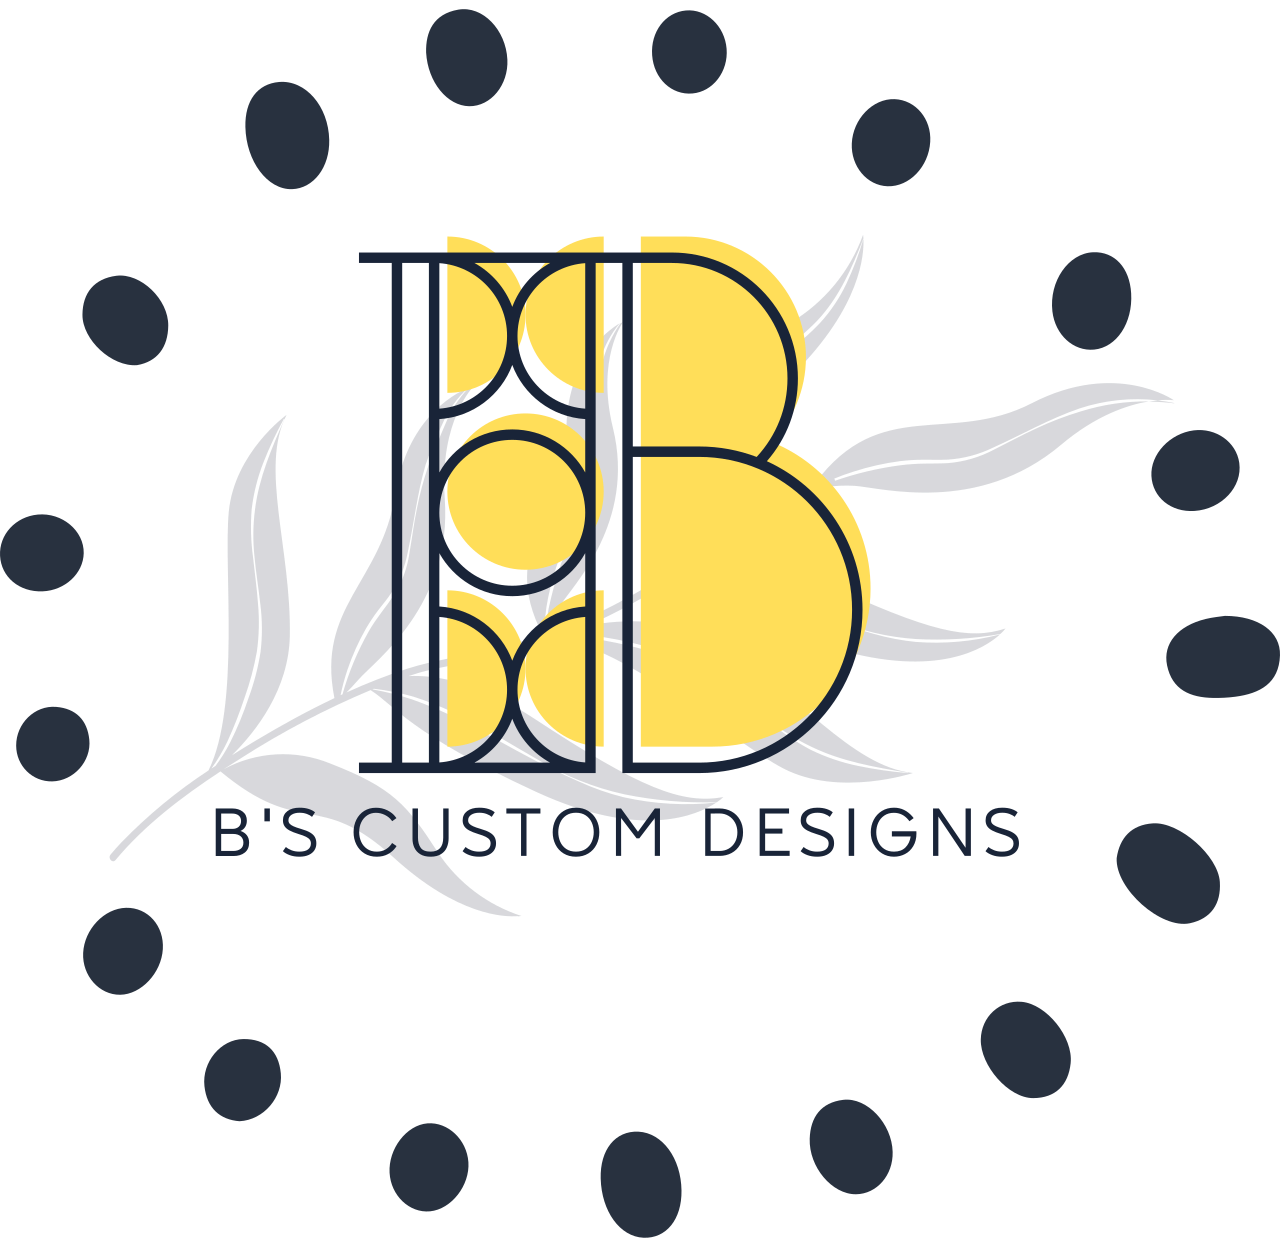 B's Custom Designs's web page